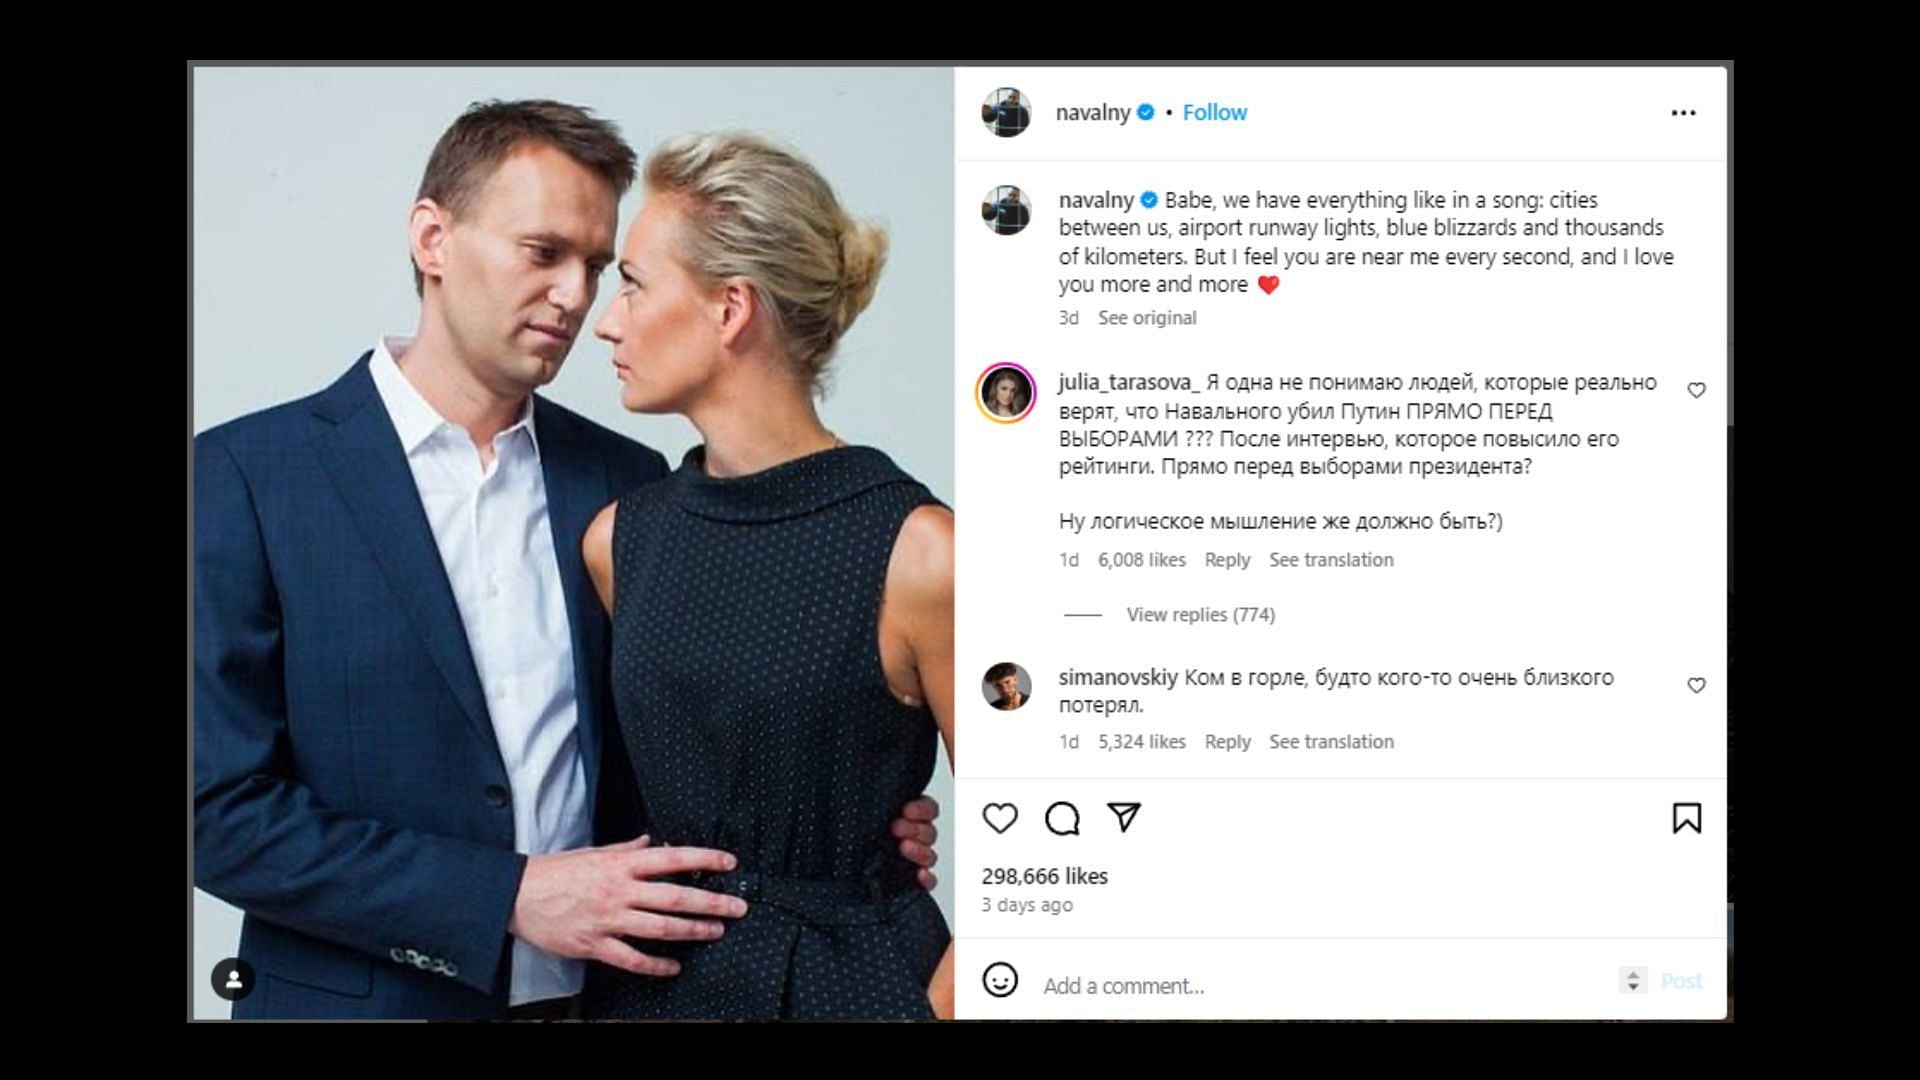 The post shared by Alexei on Instagram (Image via navalny/Instagram)